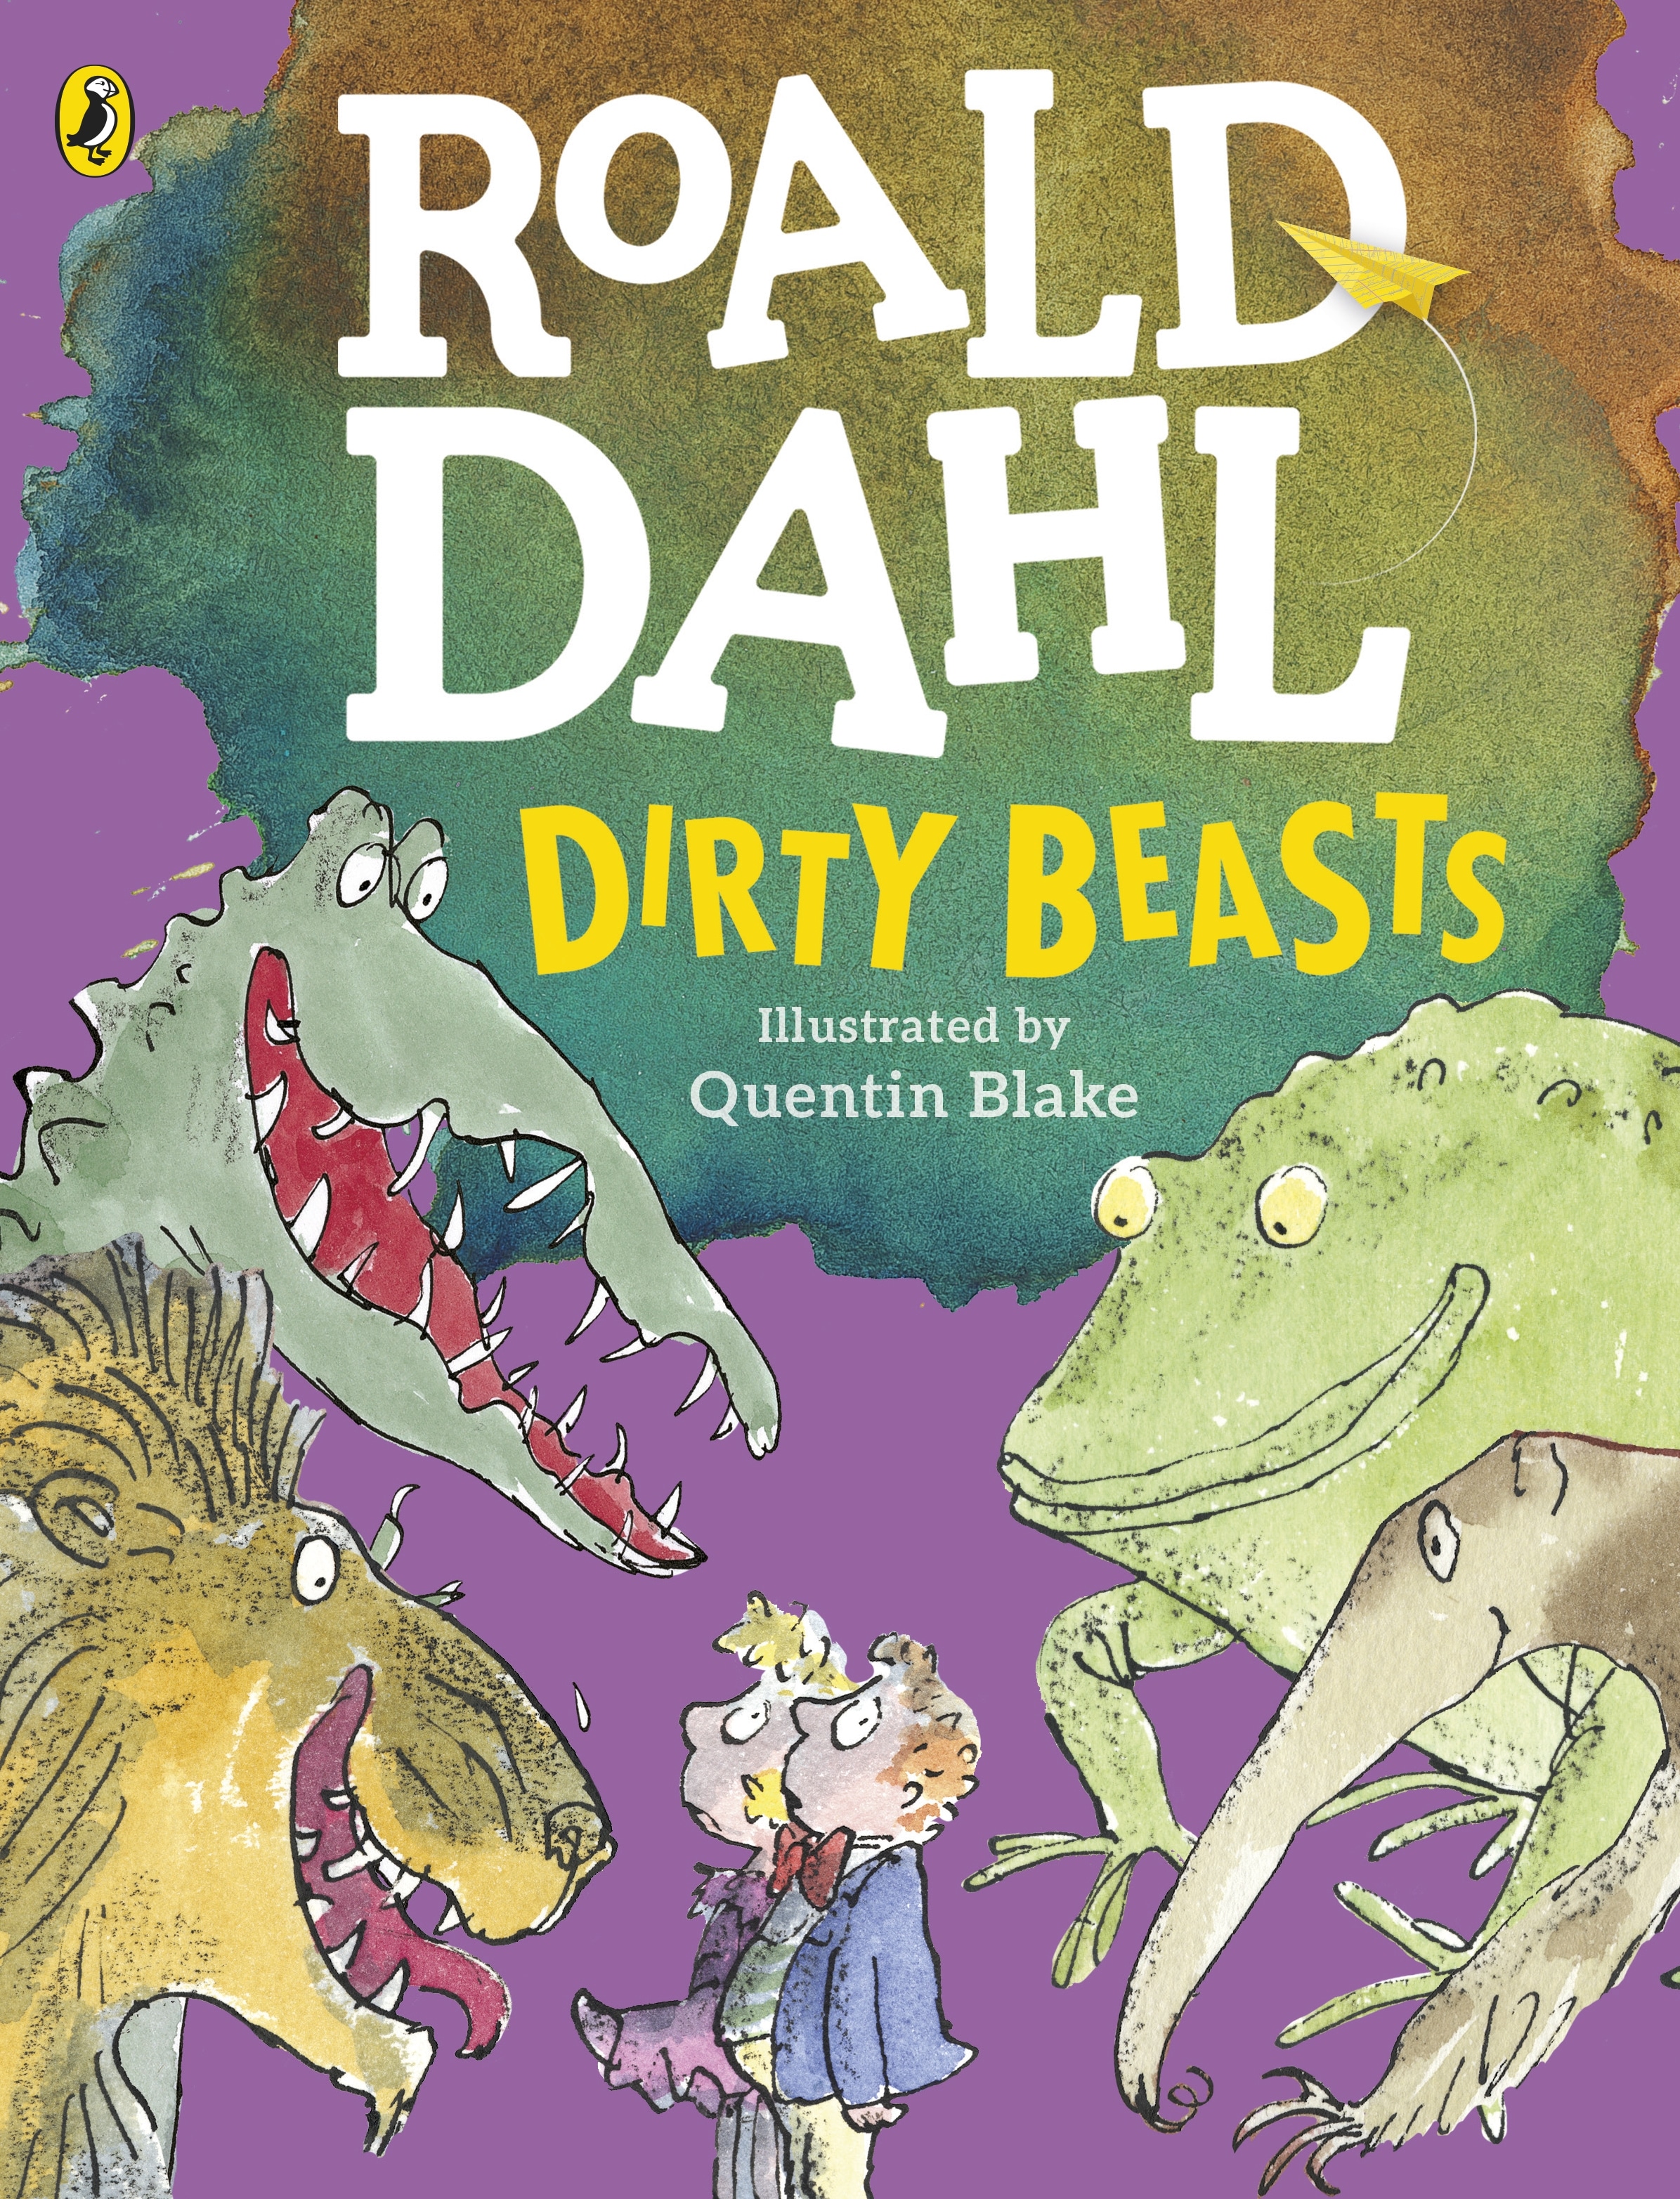 Book “Dirty Beasts” by Roald Dahl — July 7, 2016